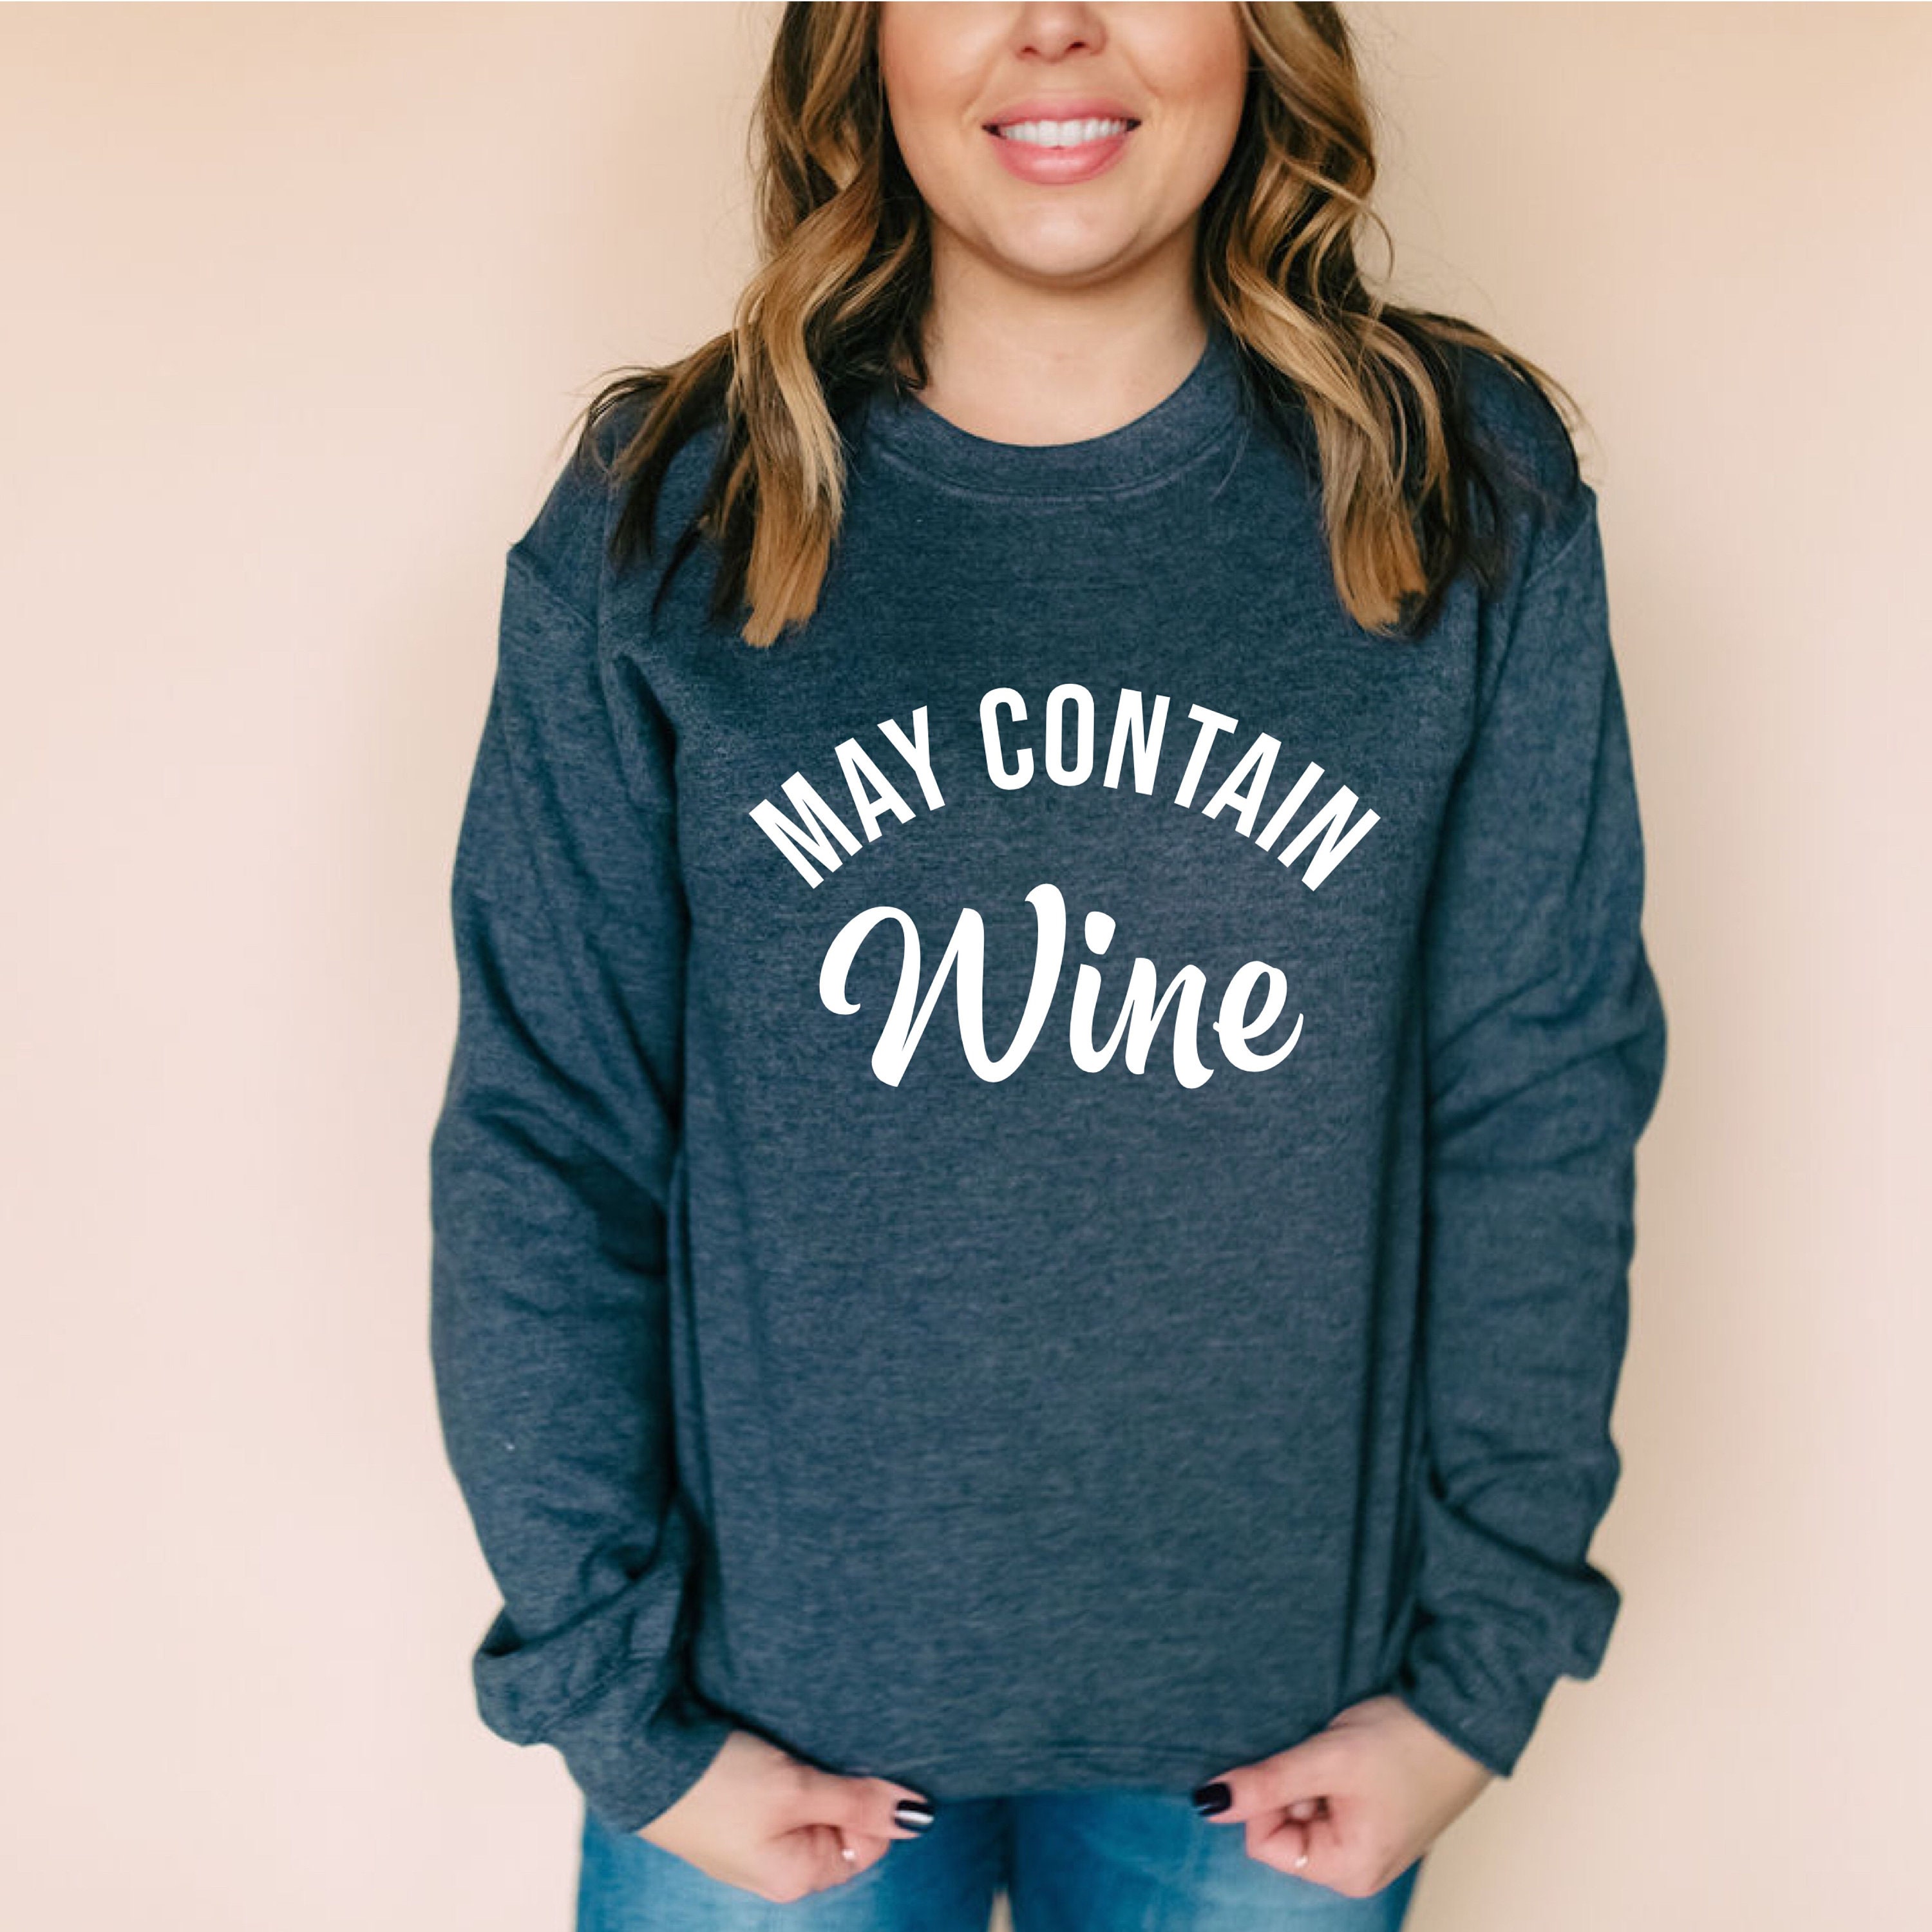 Funny Sweatshirt Sweatshirt Party Sweatshirt May Contain Wine Women's Sweatshirt Birthday Gifts Personalized Gift Wine O'Clock